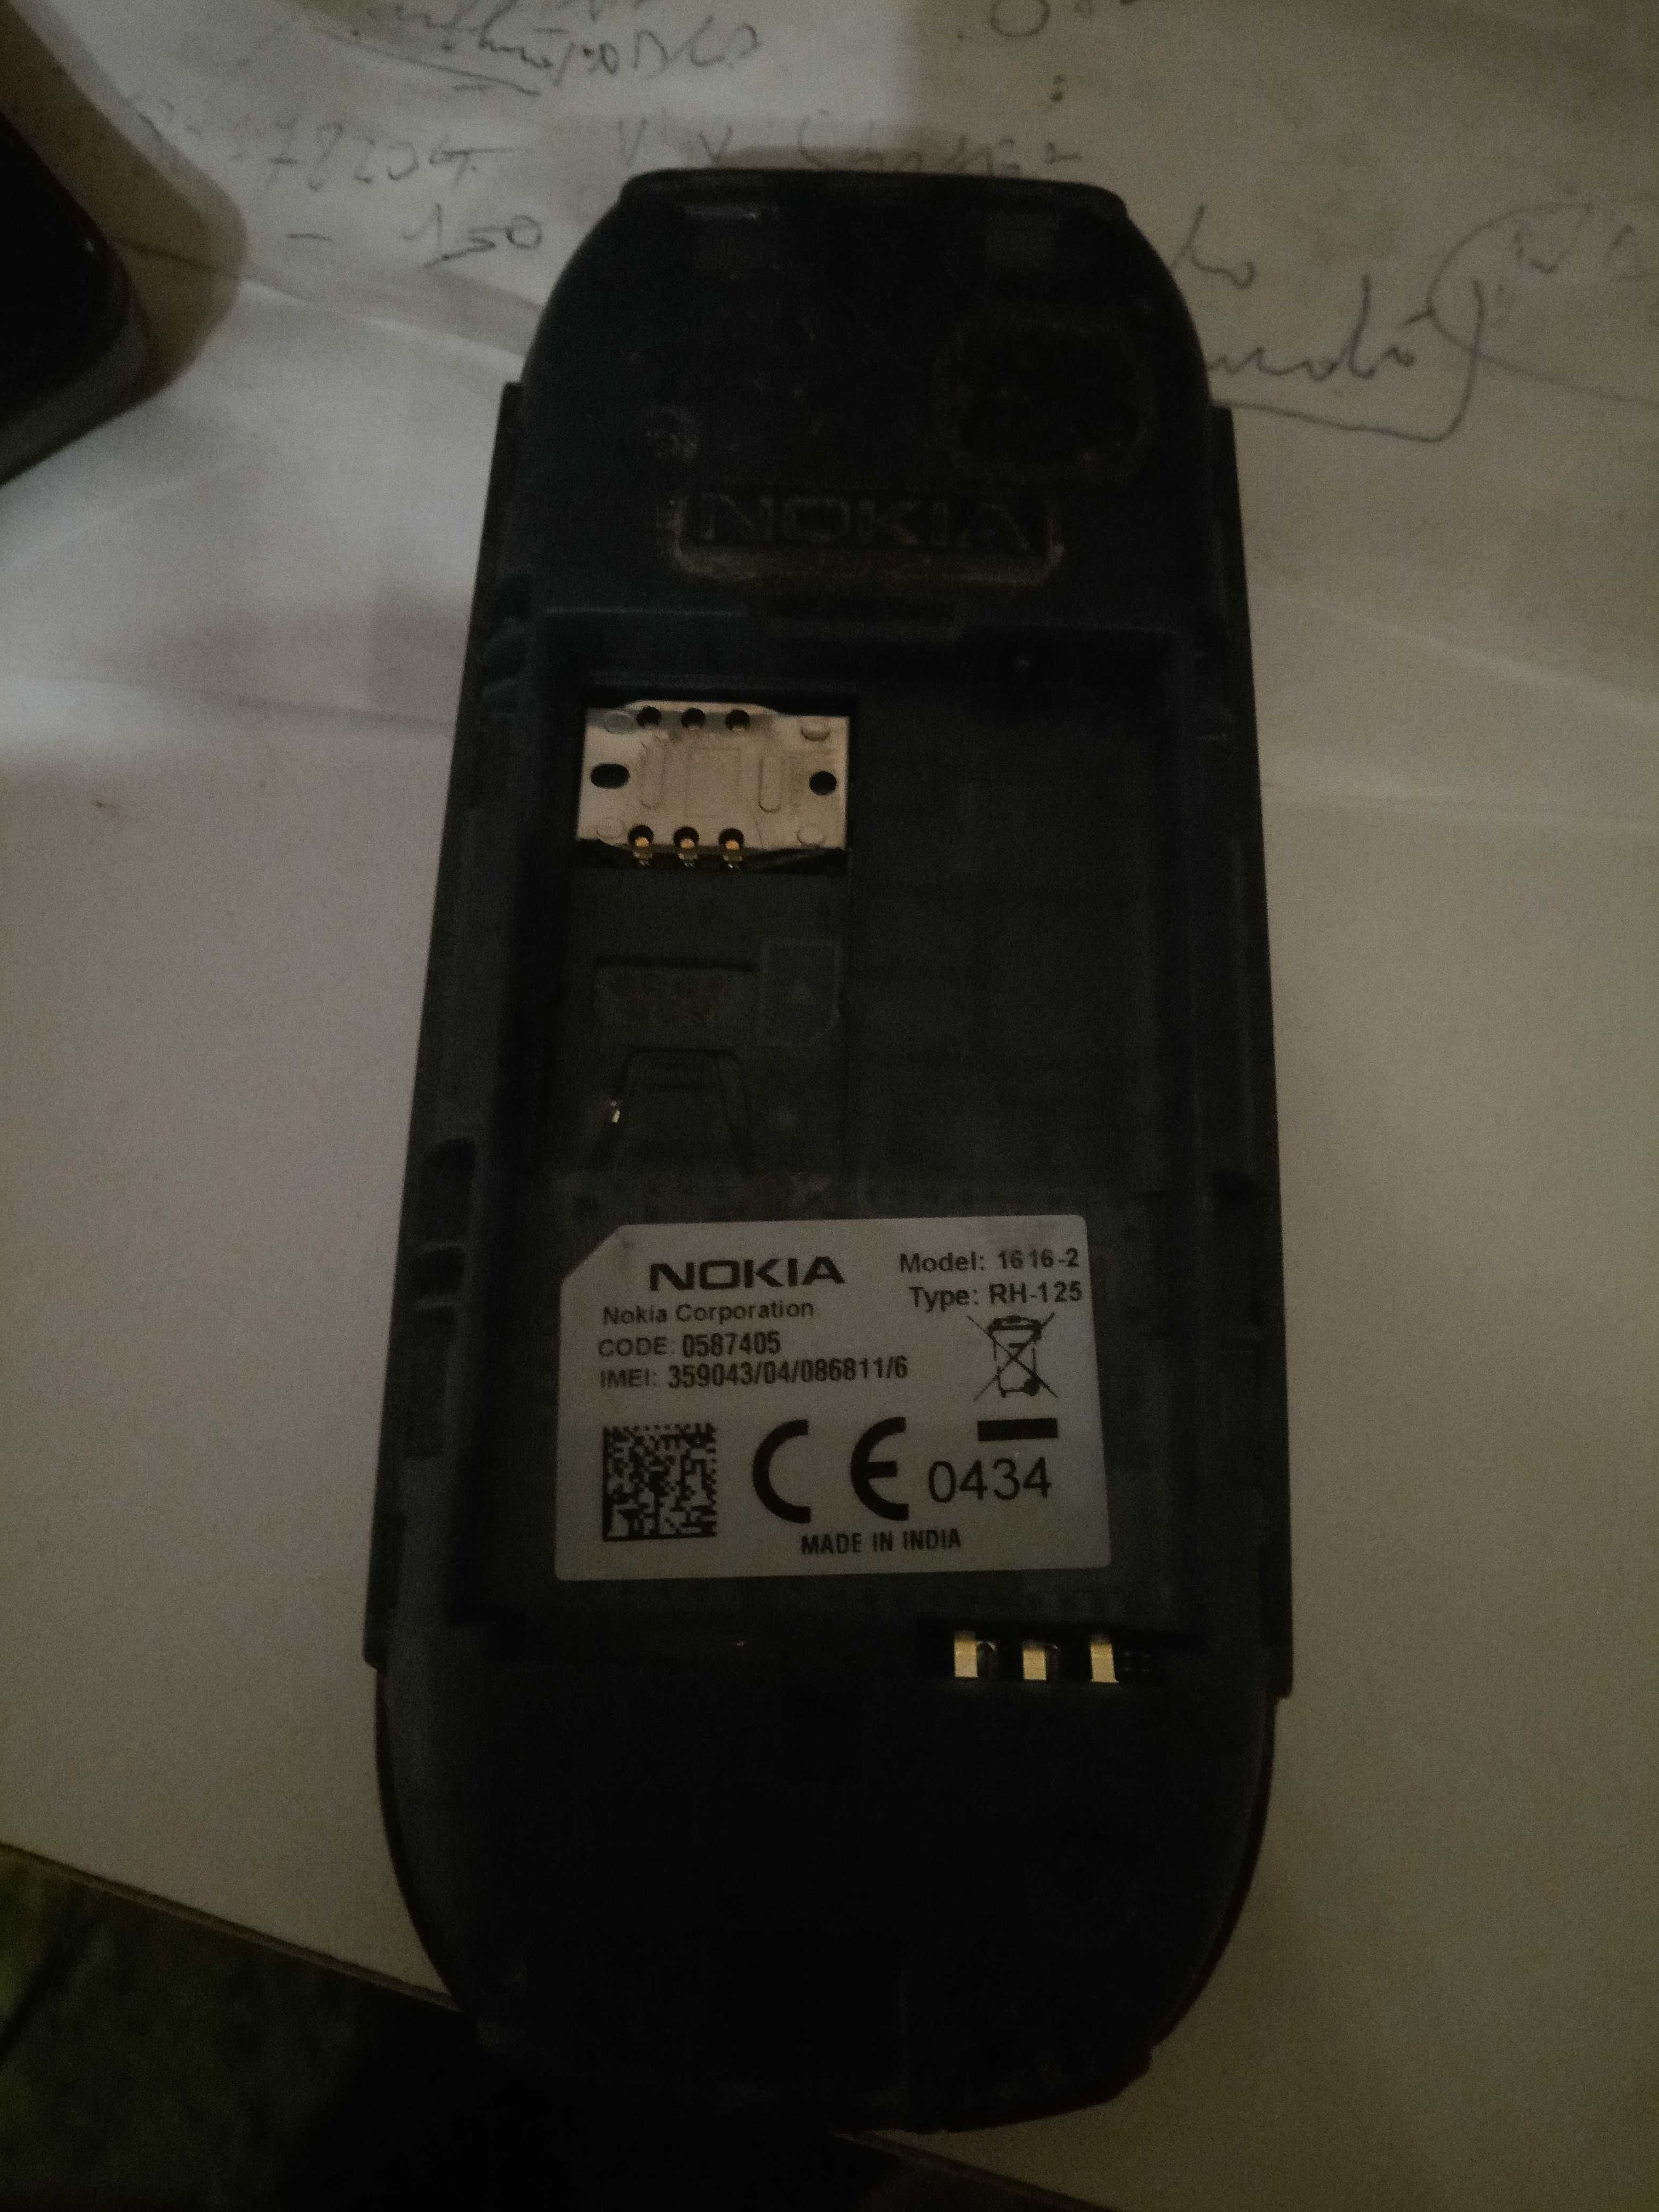 Telefon Nokia 1616